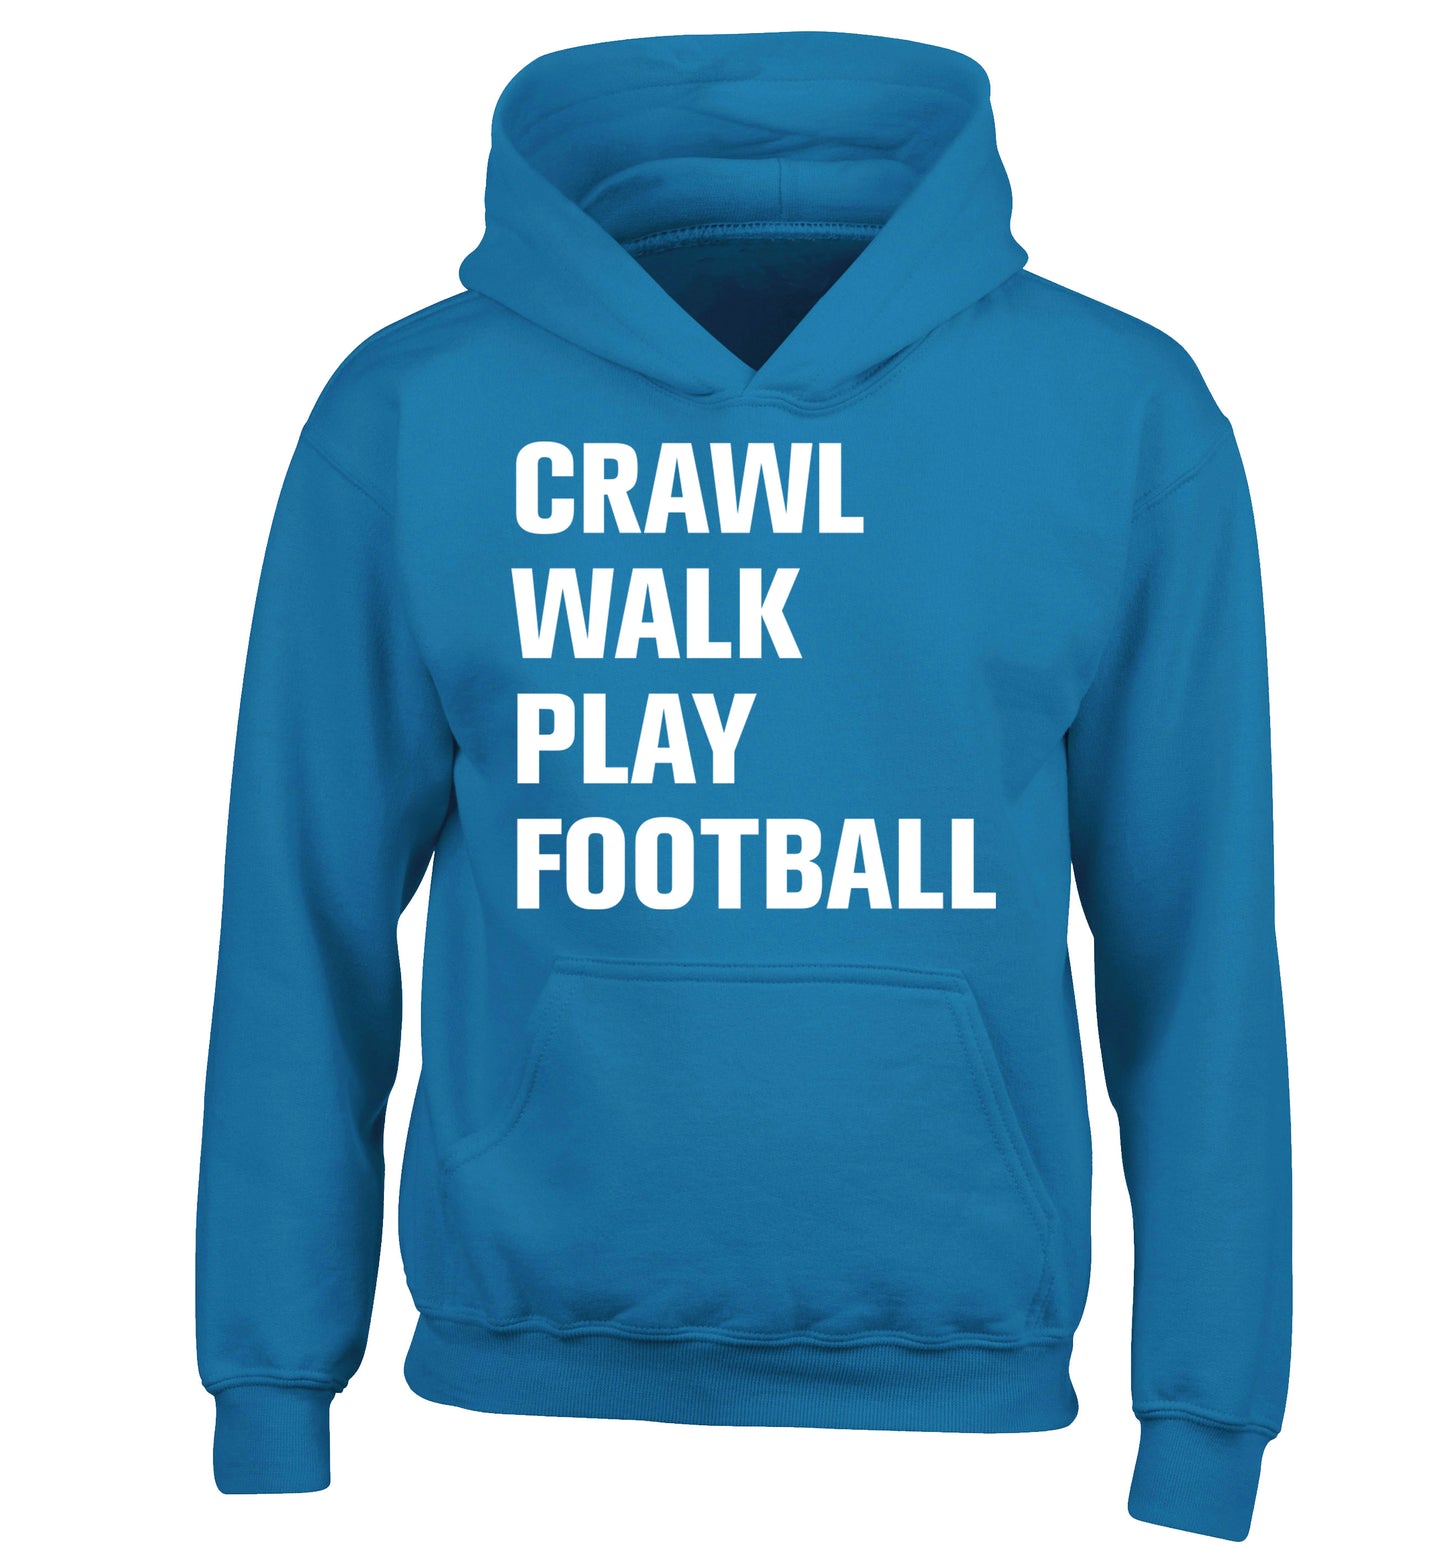 Crawl, walk, play football children's blue hoodie 12-13 Years